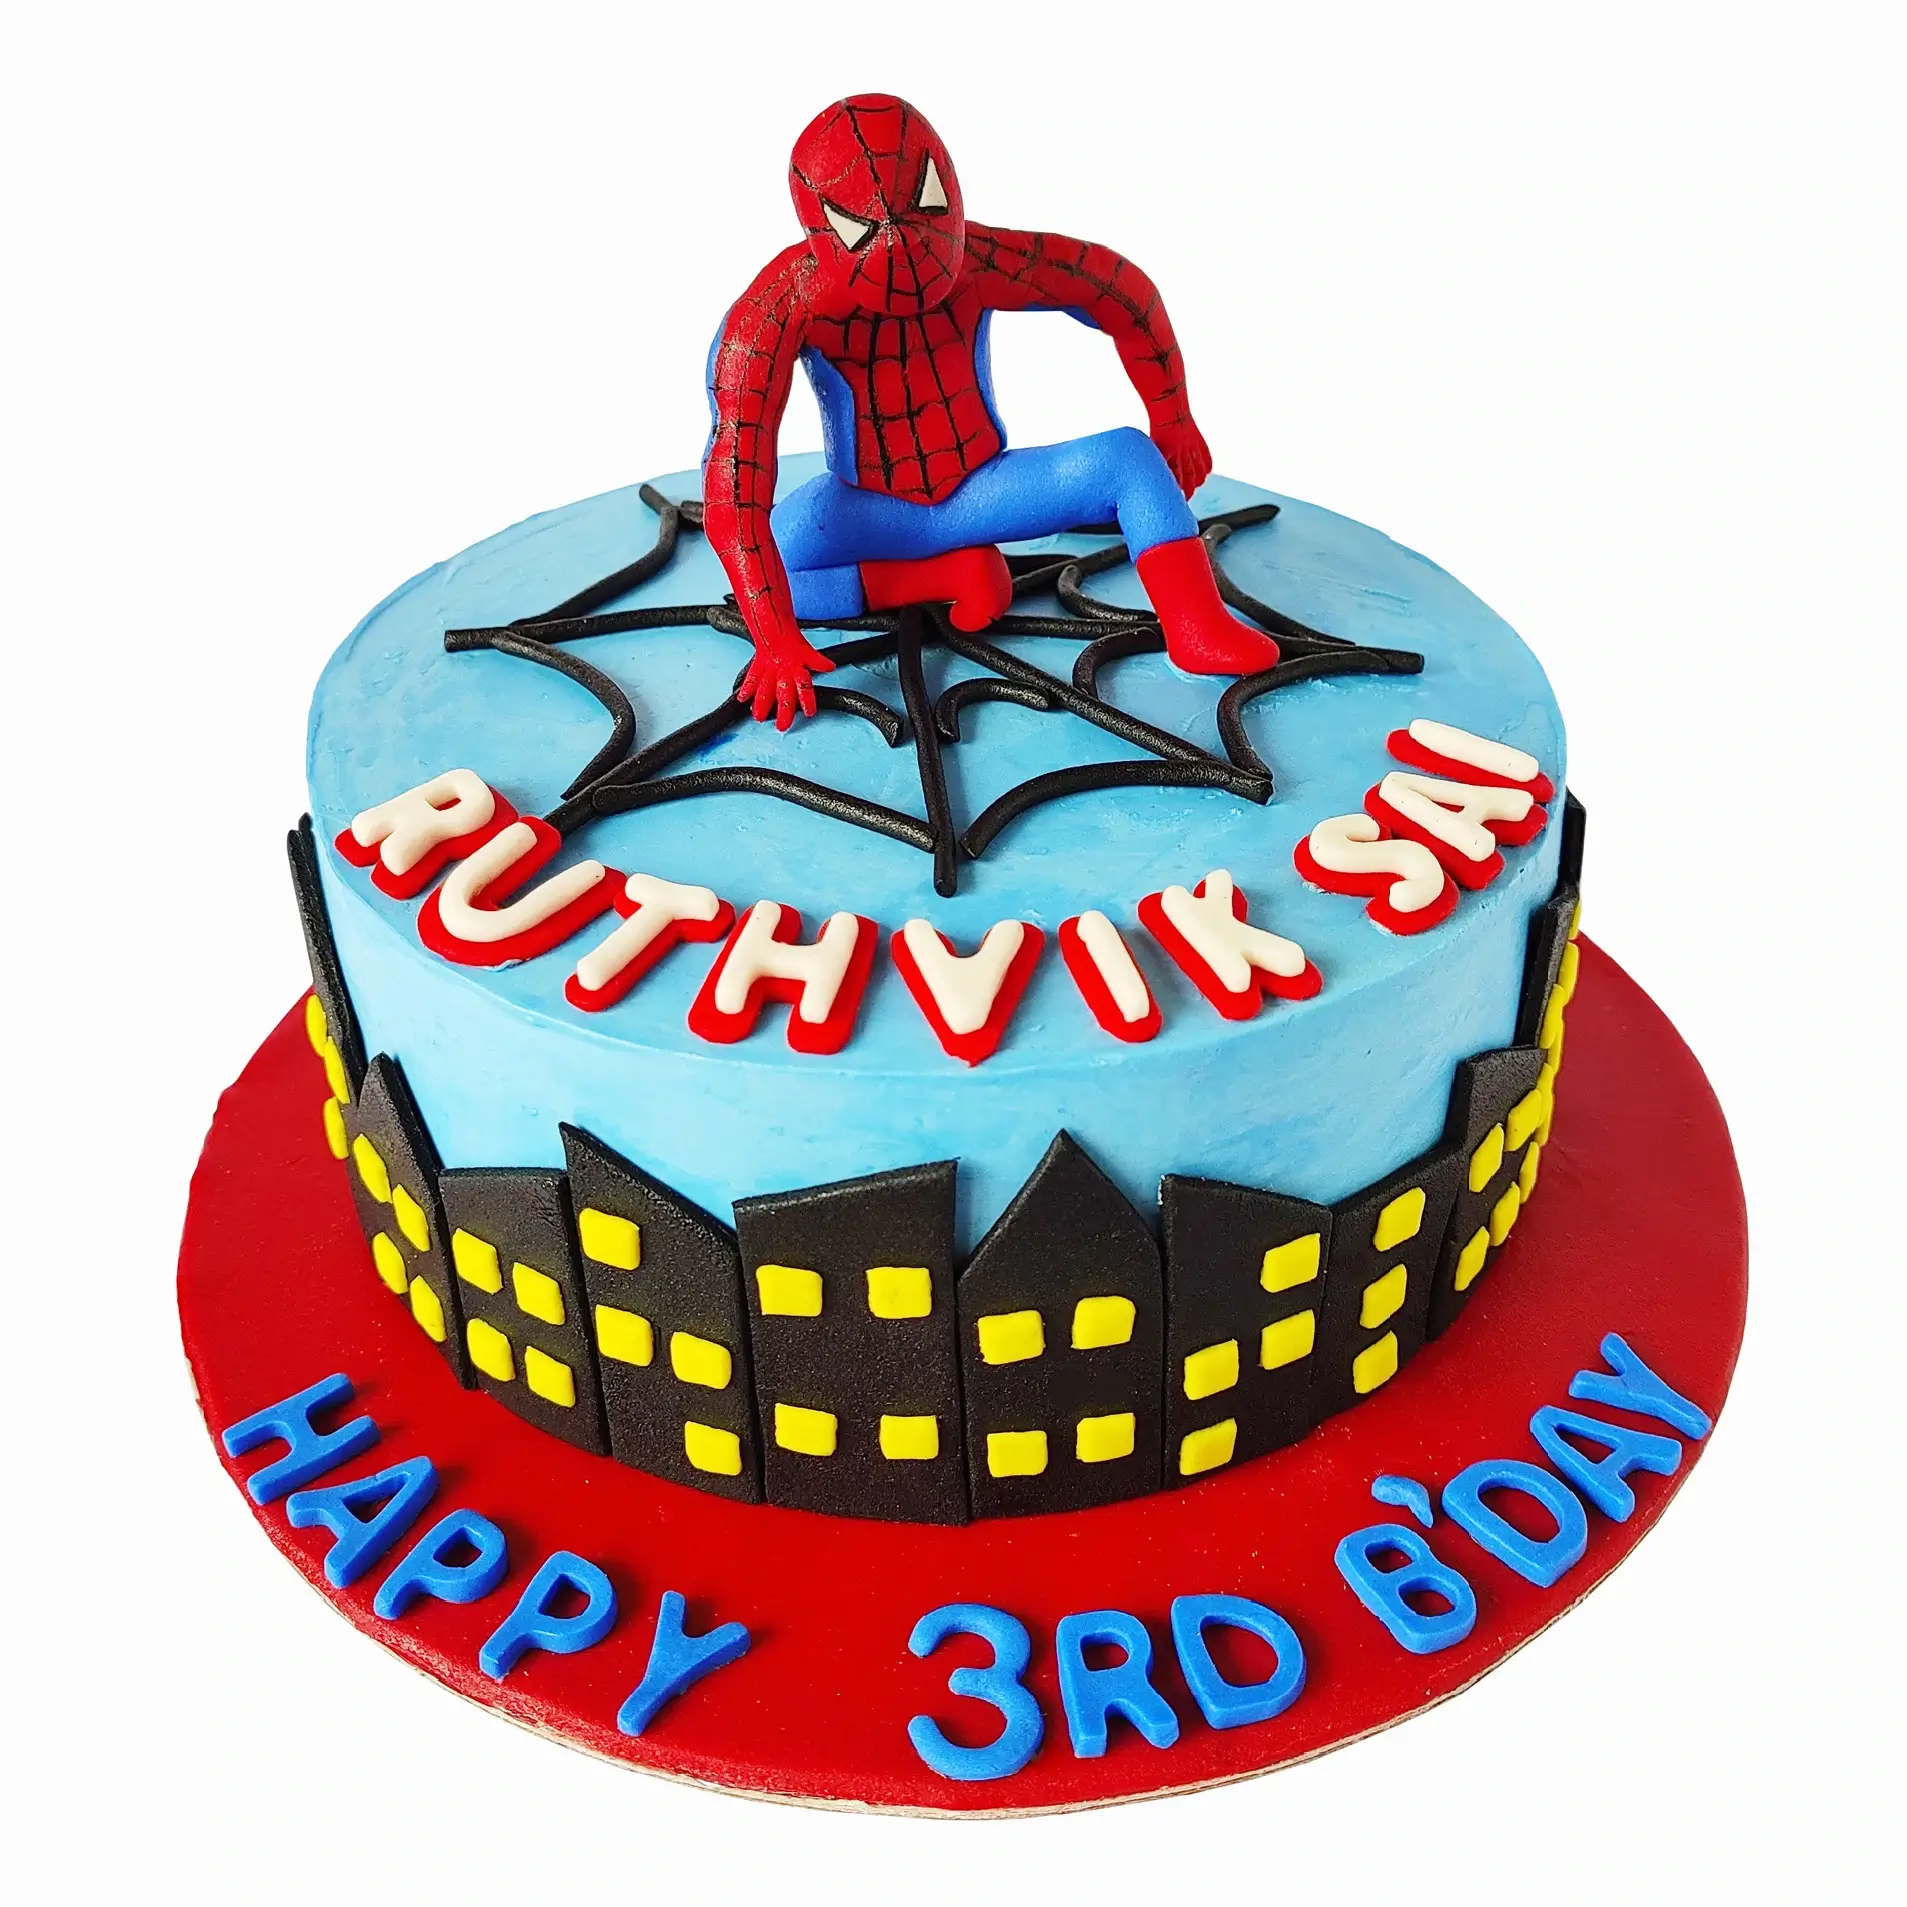 Order your spiderman birthday cake online